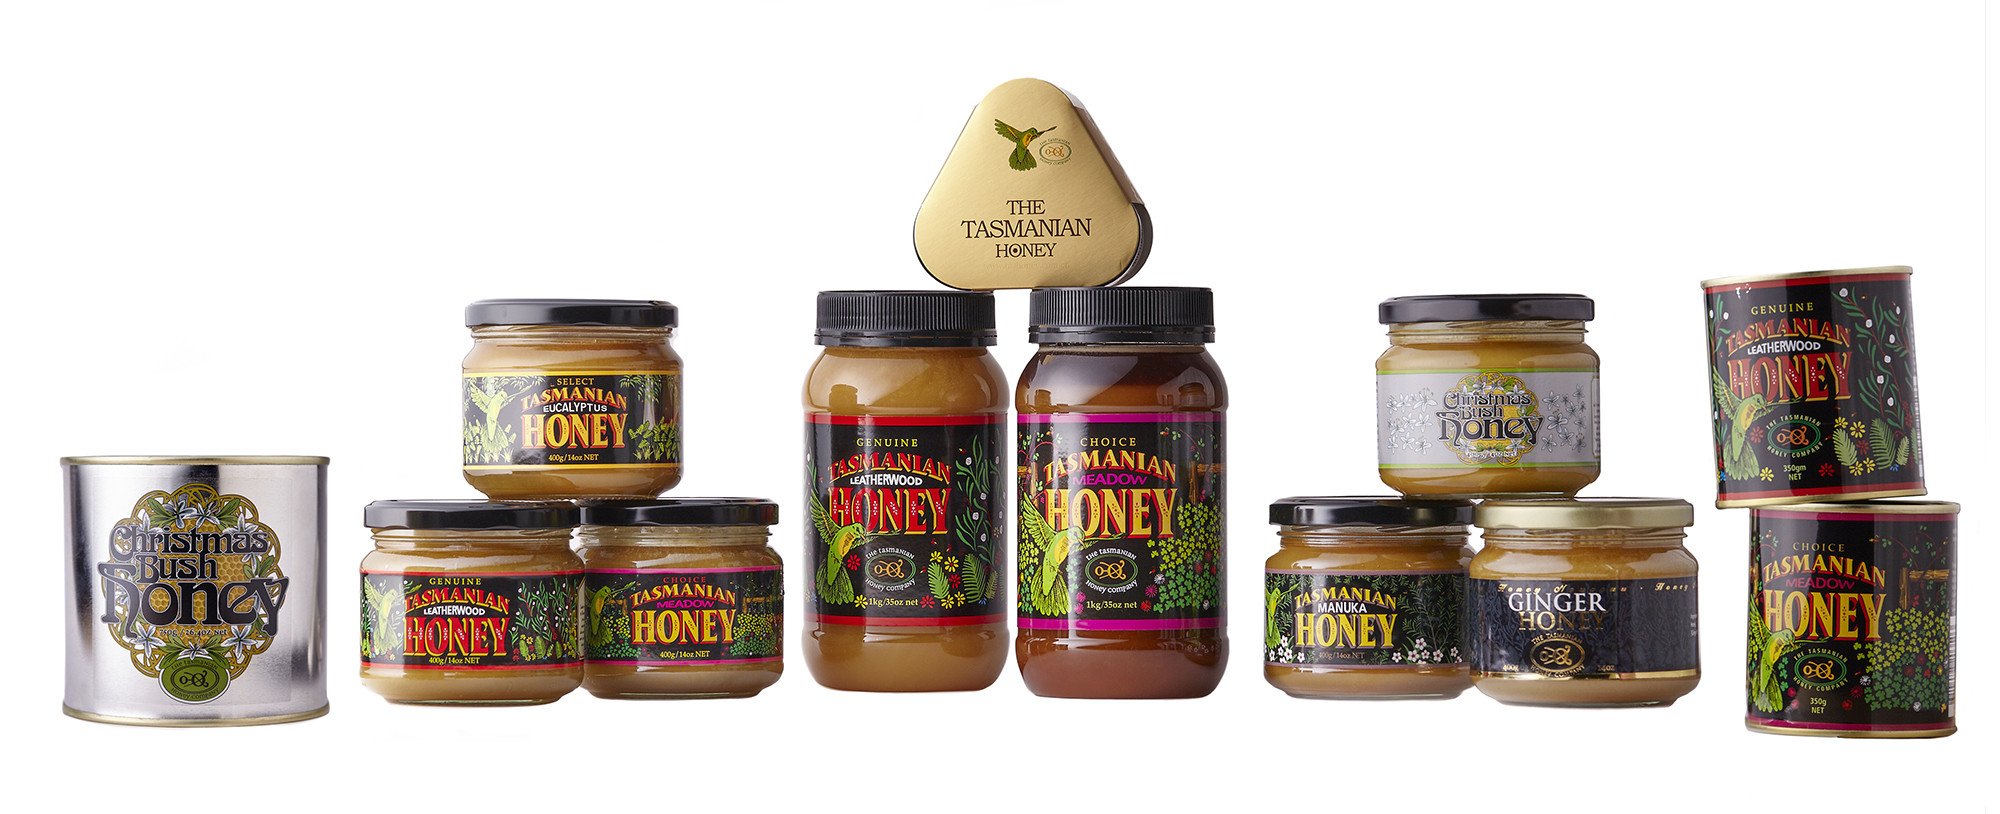 Tasmanian Honey Company Collection